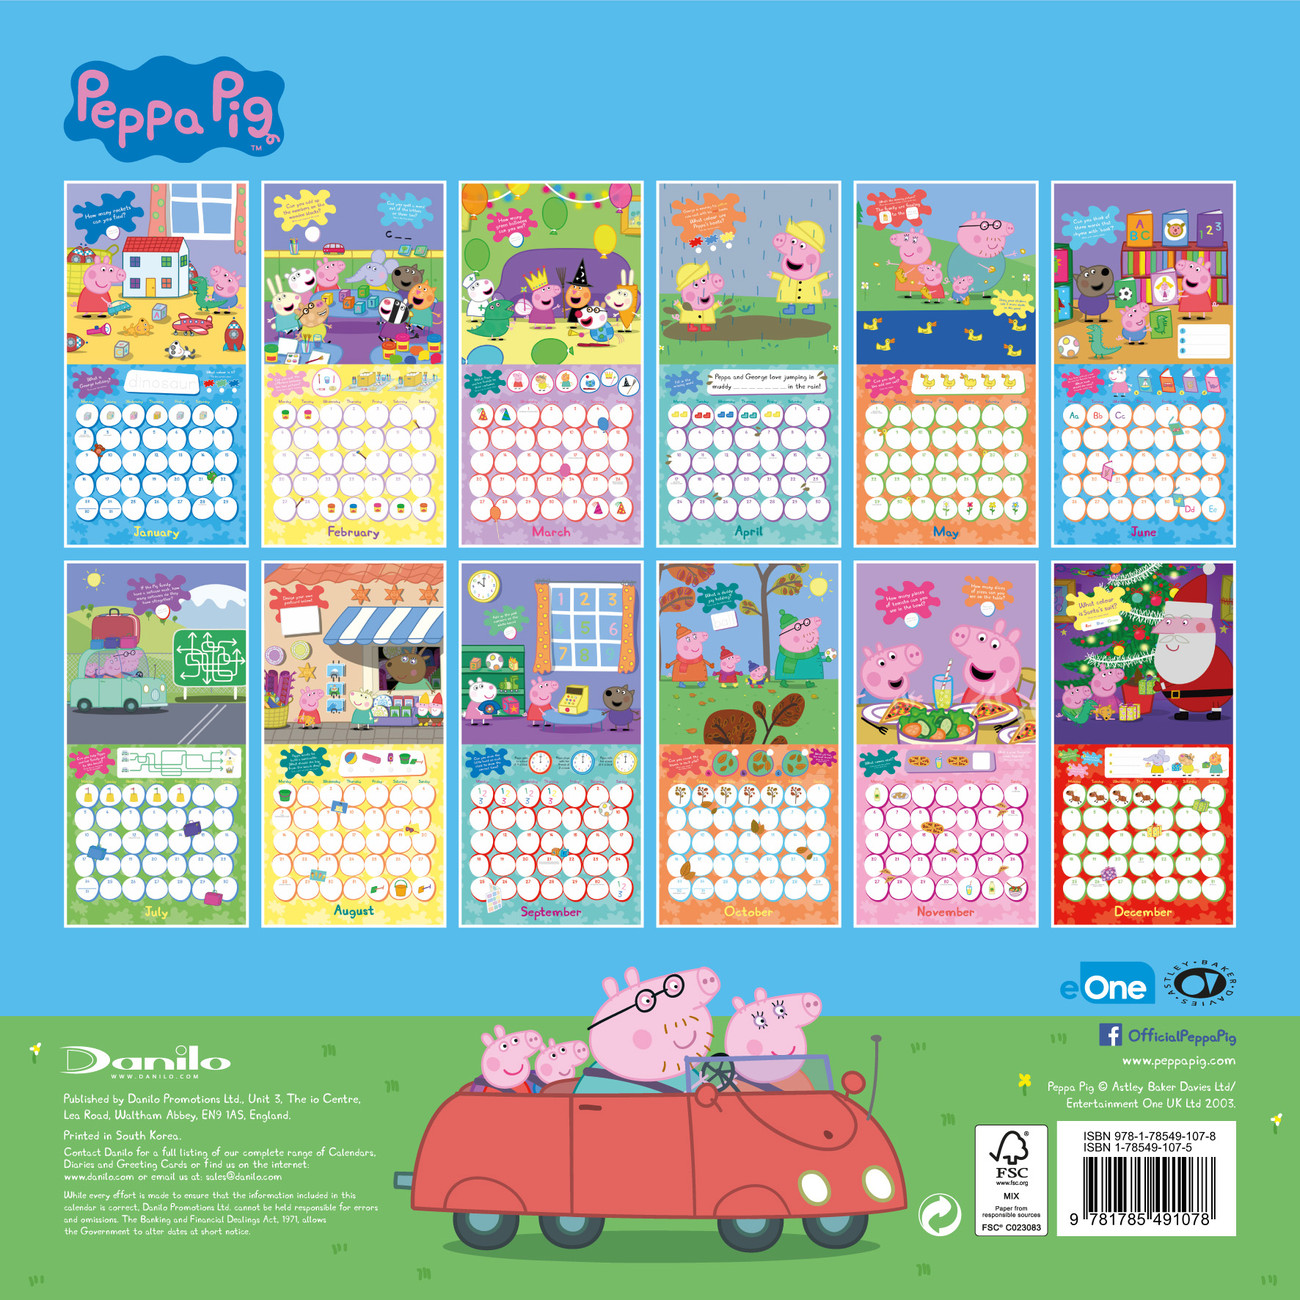 Peppa Pig - Calendars 2019 on UKposters/UKposters